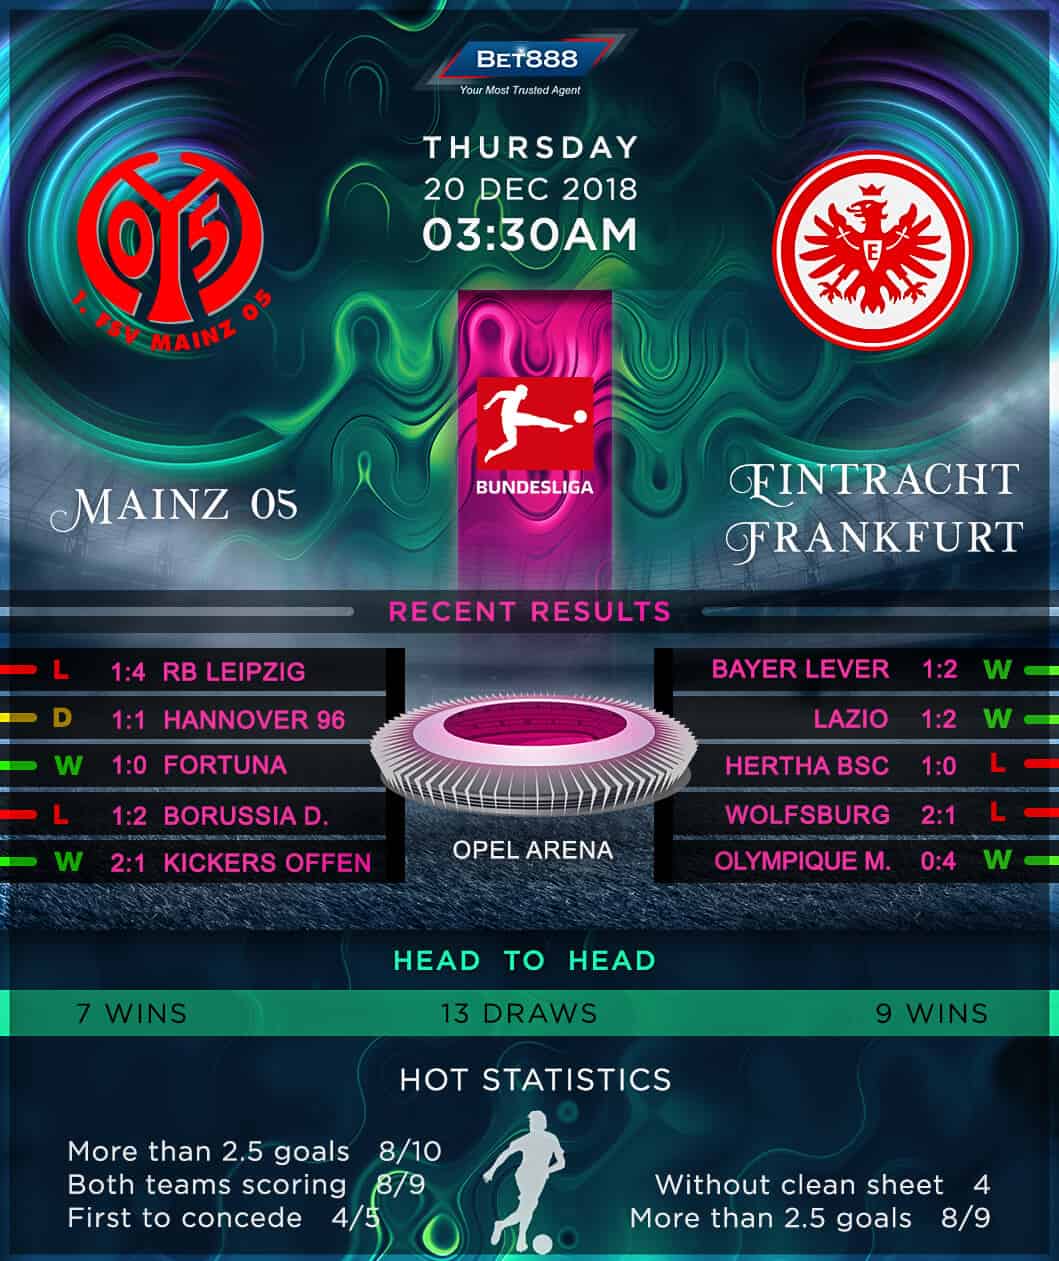 Mainz 05 vs Eintracht Frankfurt 20/12/18